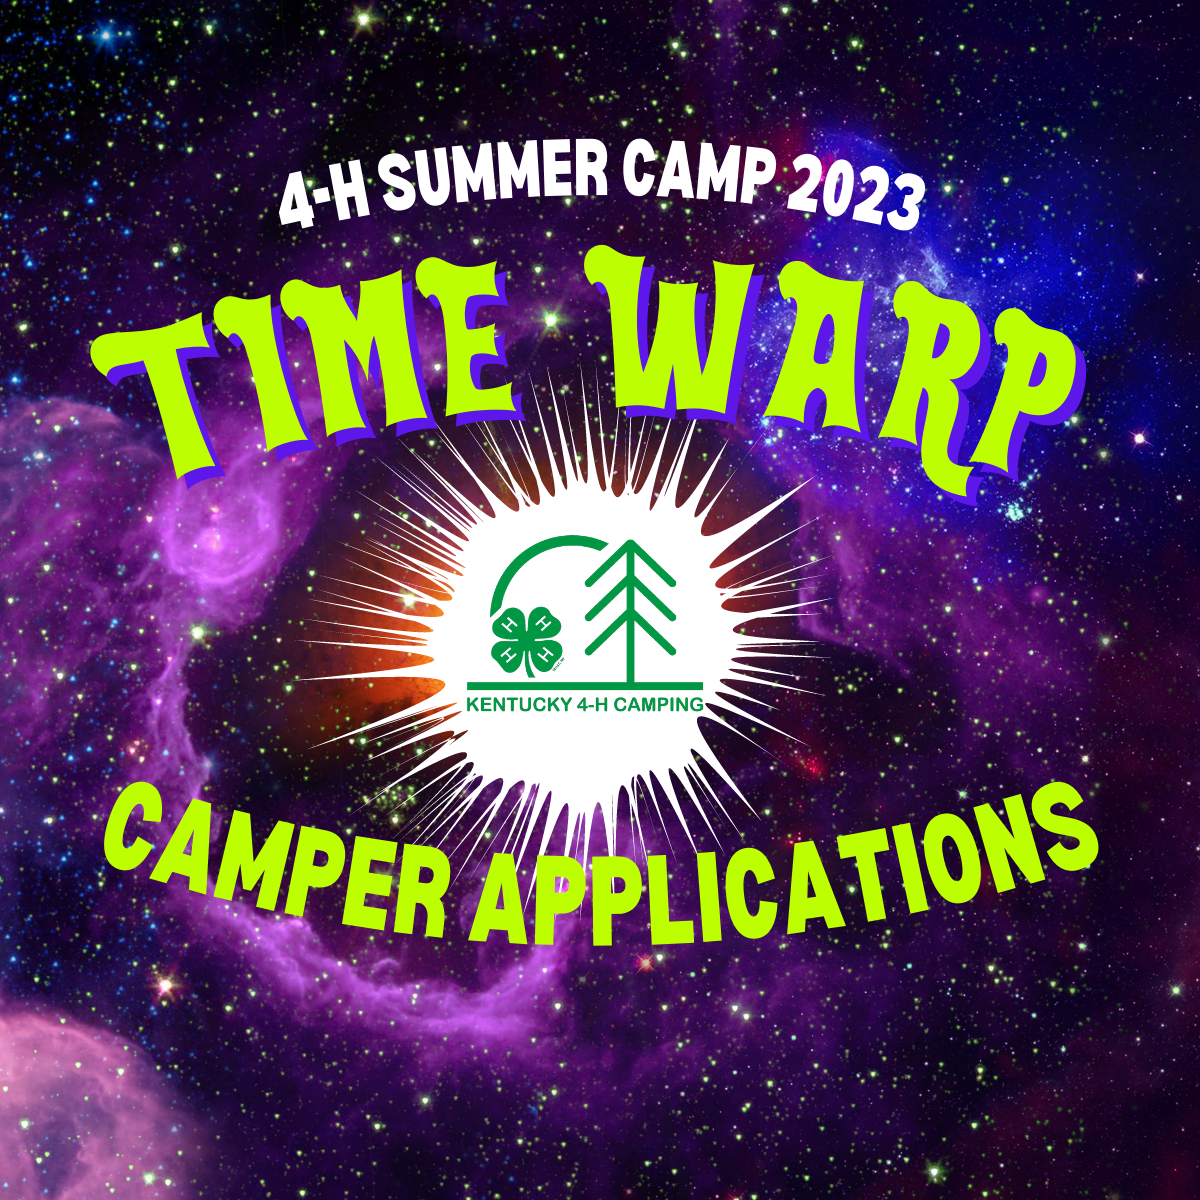 4-H Camp logo on galaxy background